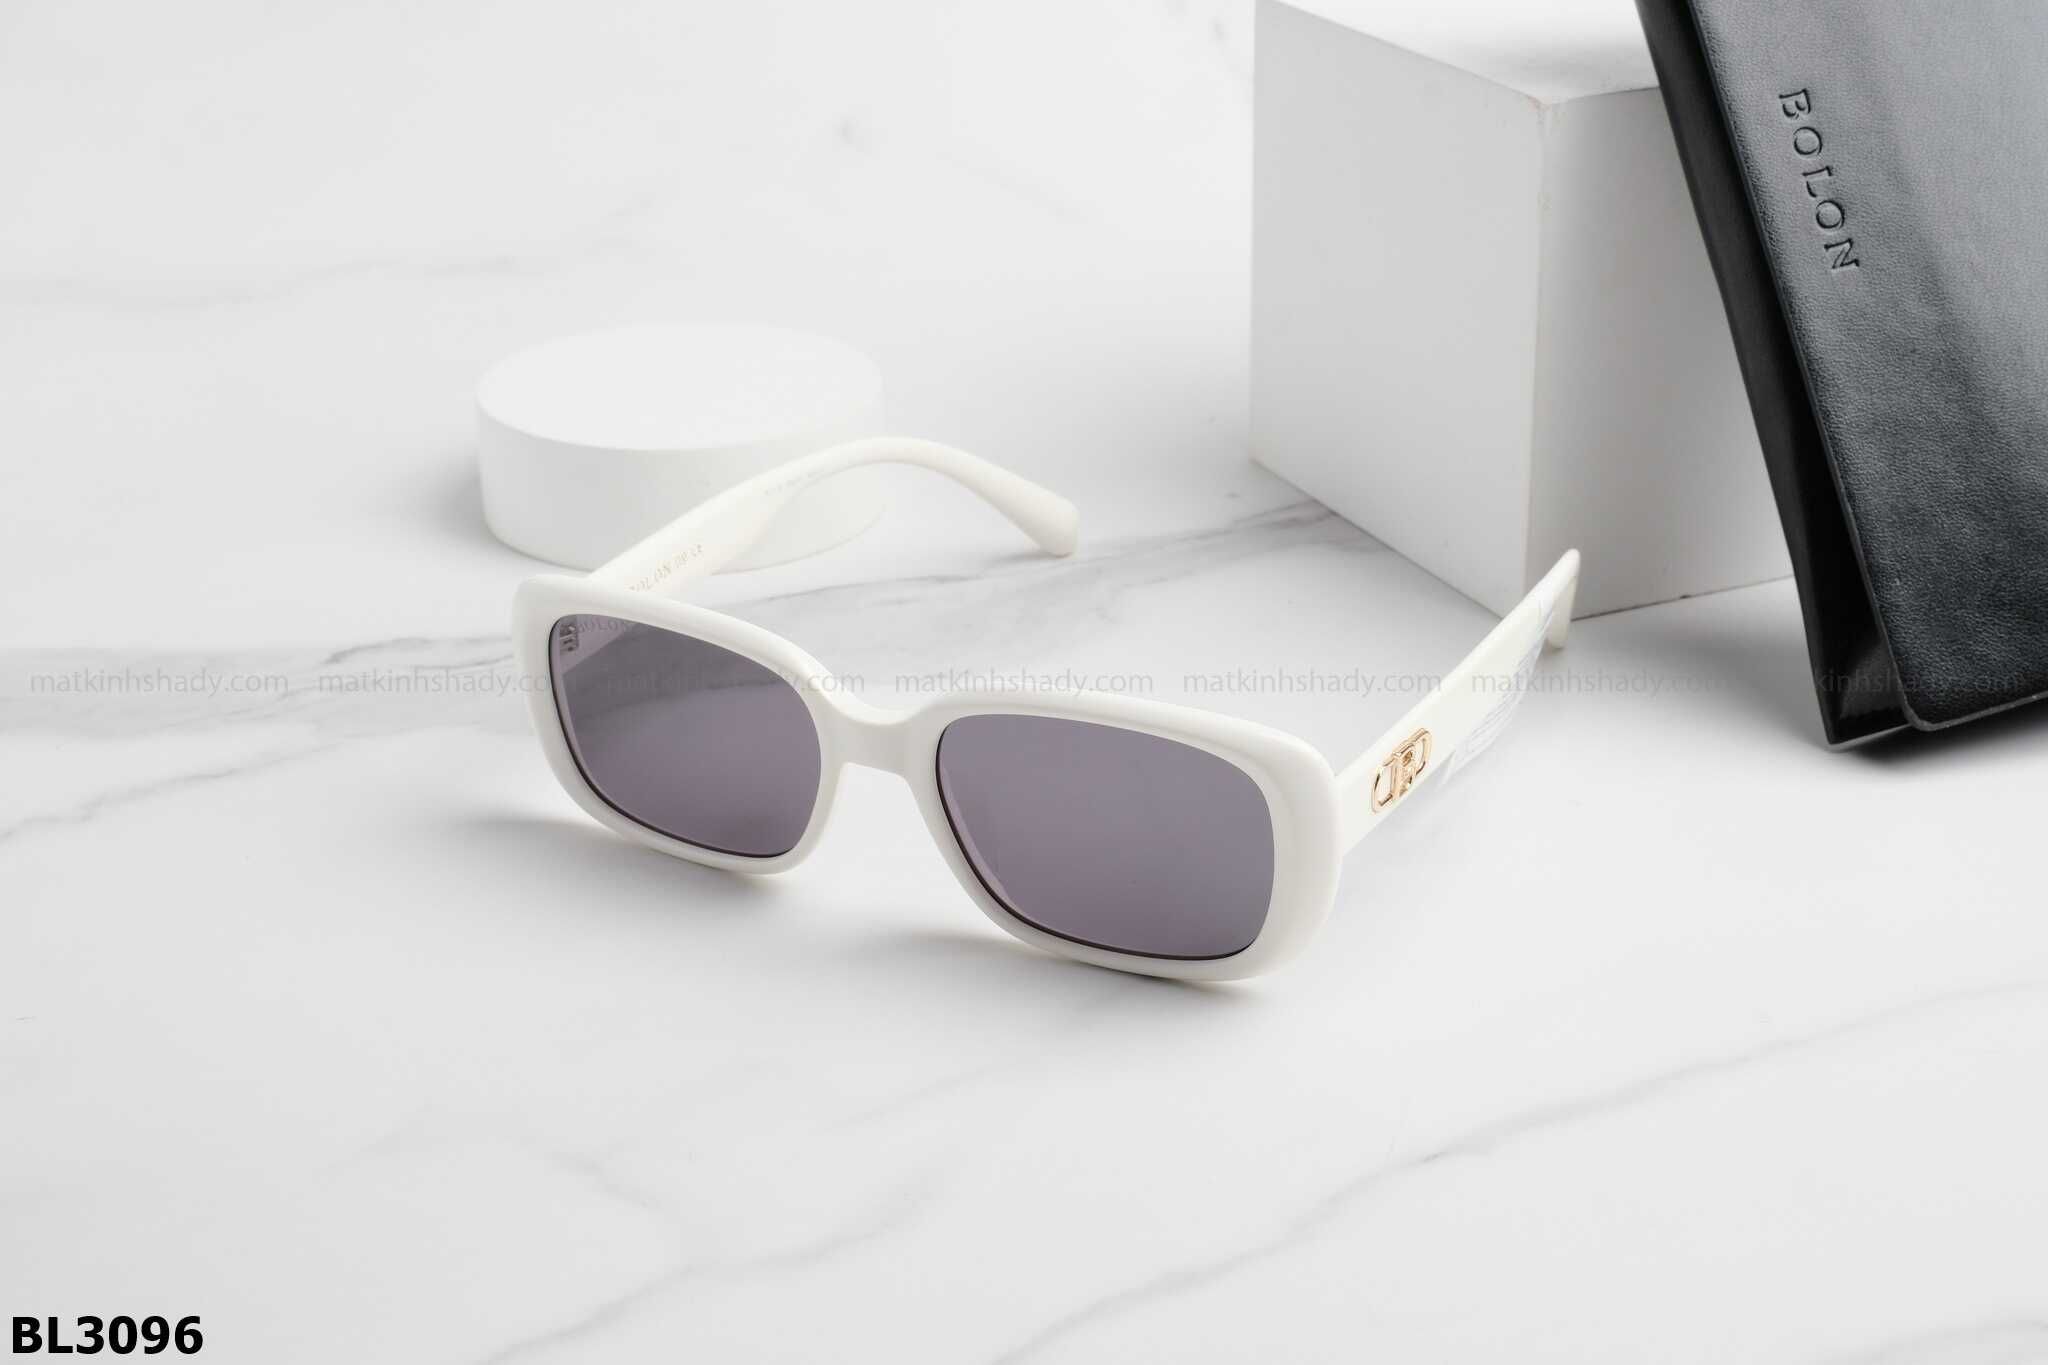  Bolon Eyewear - Sunglasses - BL3096 